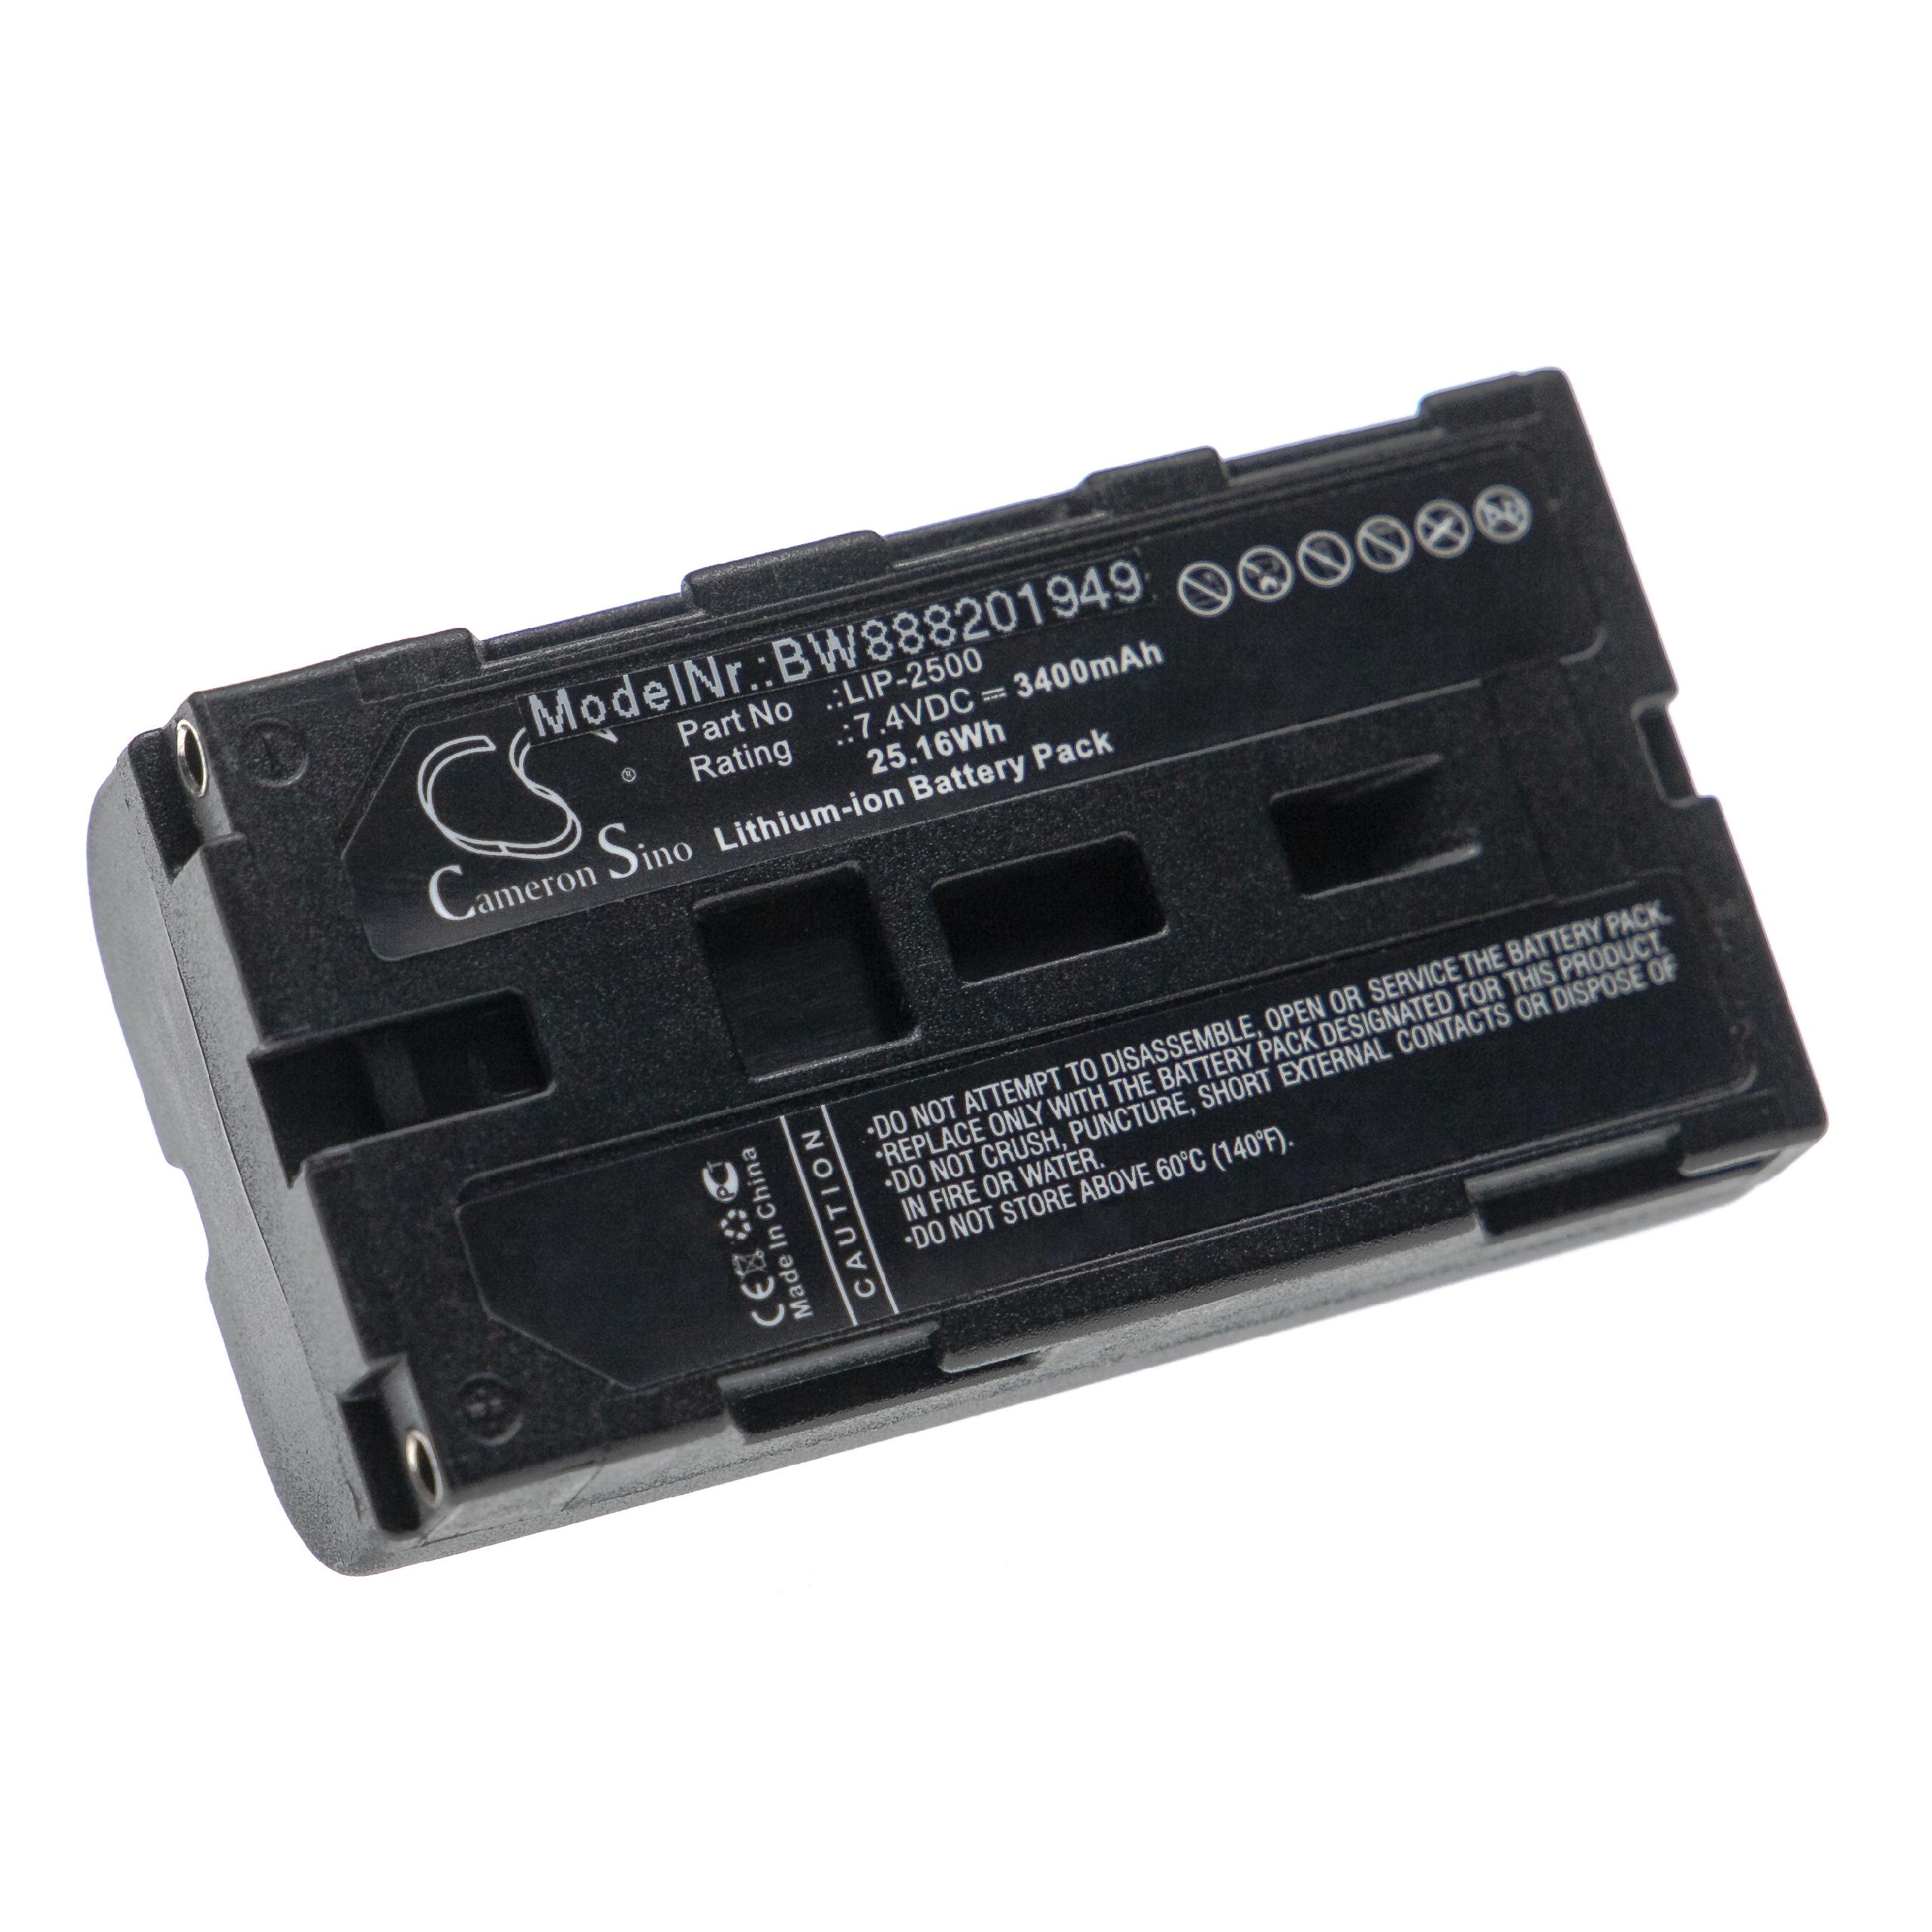 Akumulator do drukarki / drukarki etykiet zamiennik Epson C32C831091, LIP-2500, NP-500 - 3400 mAh 7,4 V Li-Ion